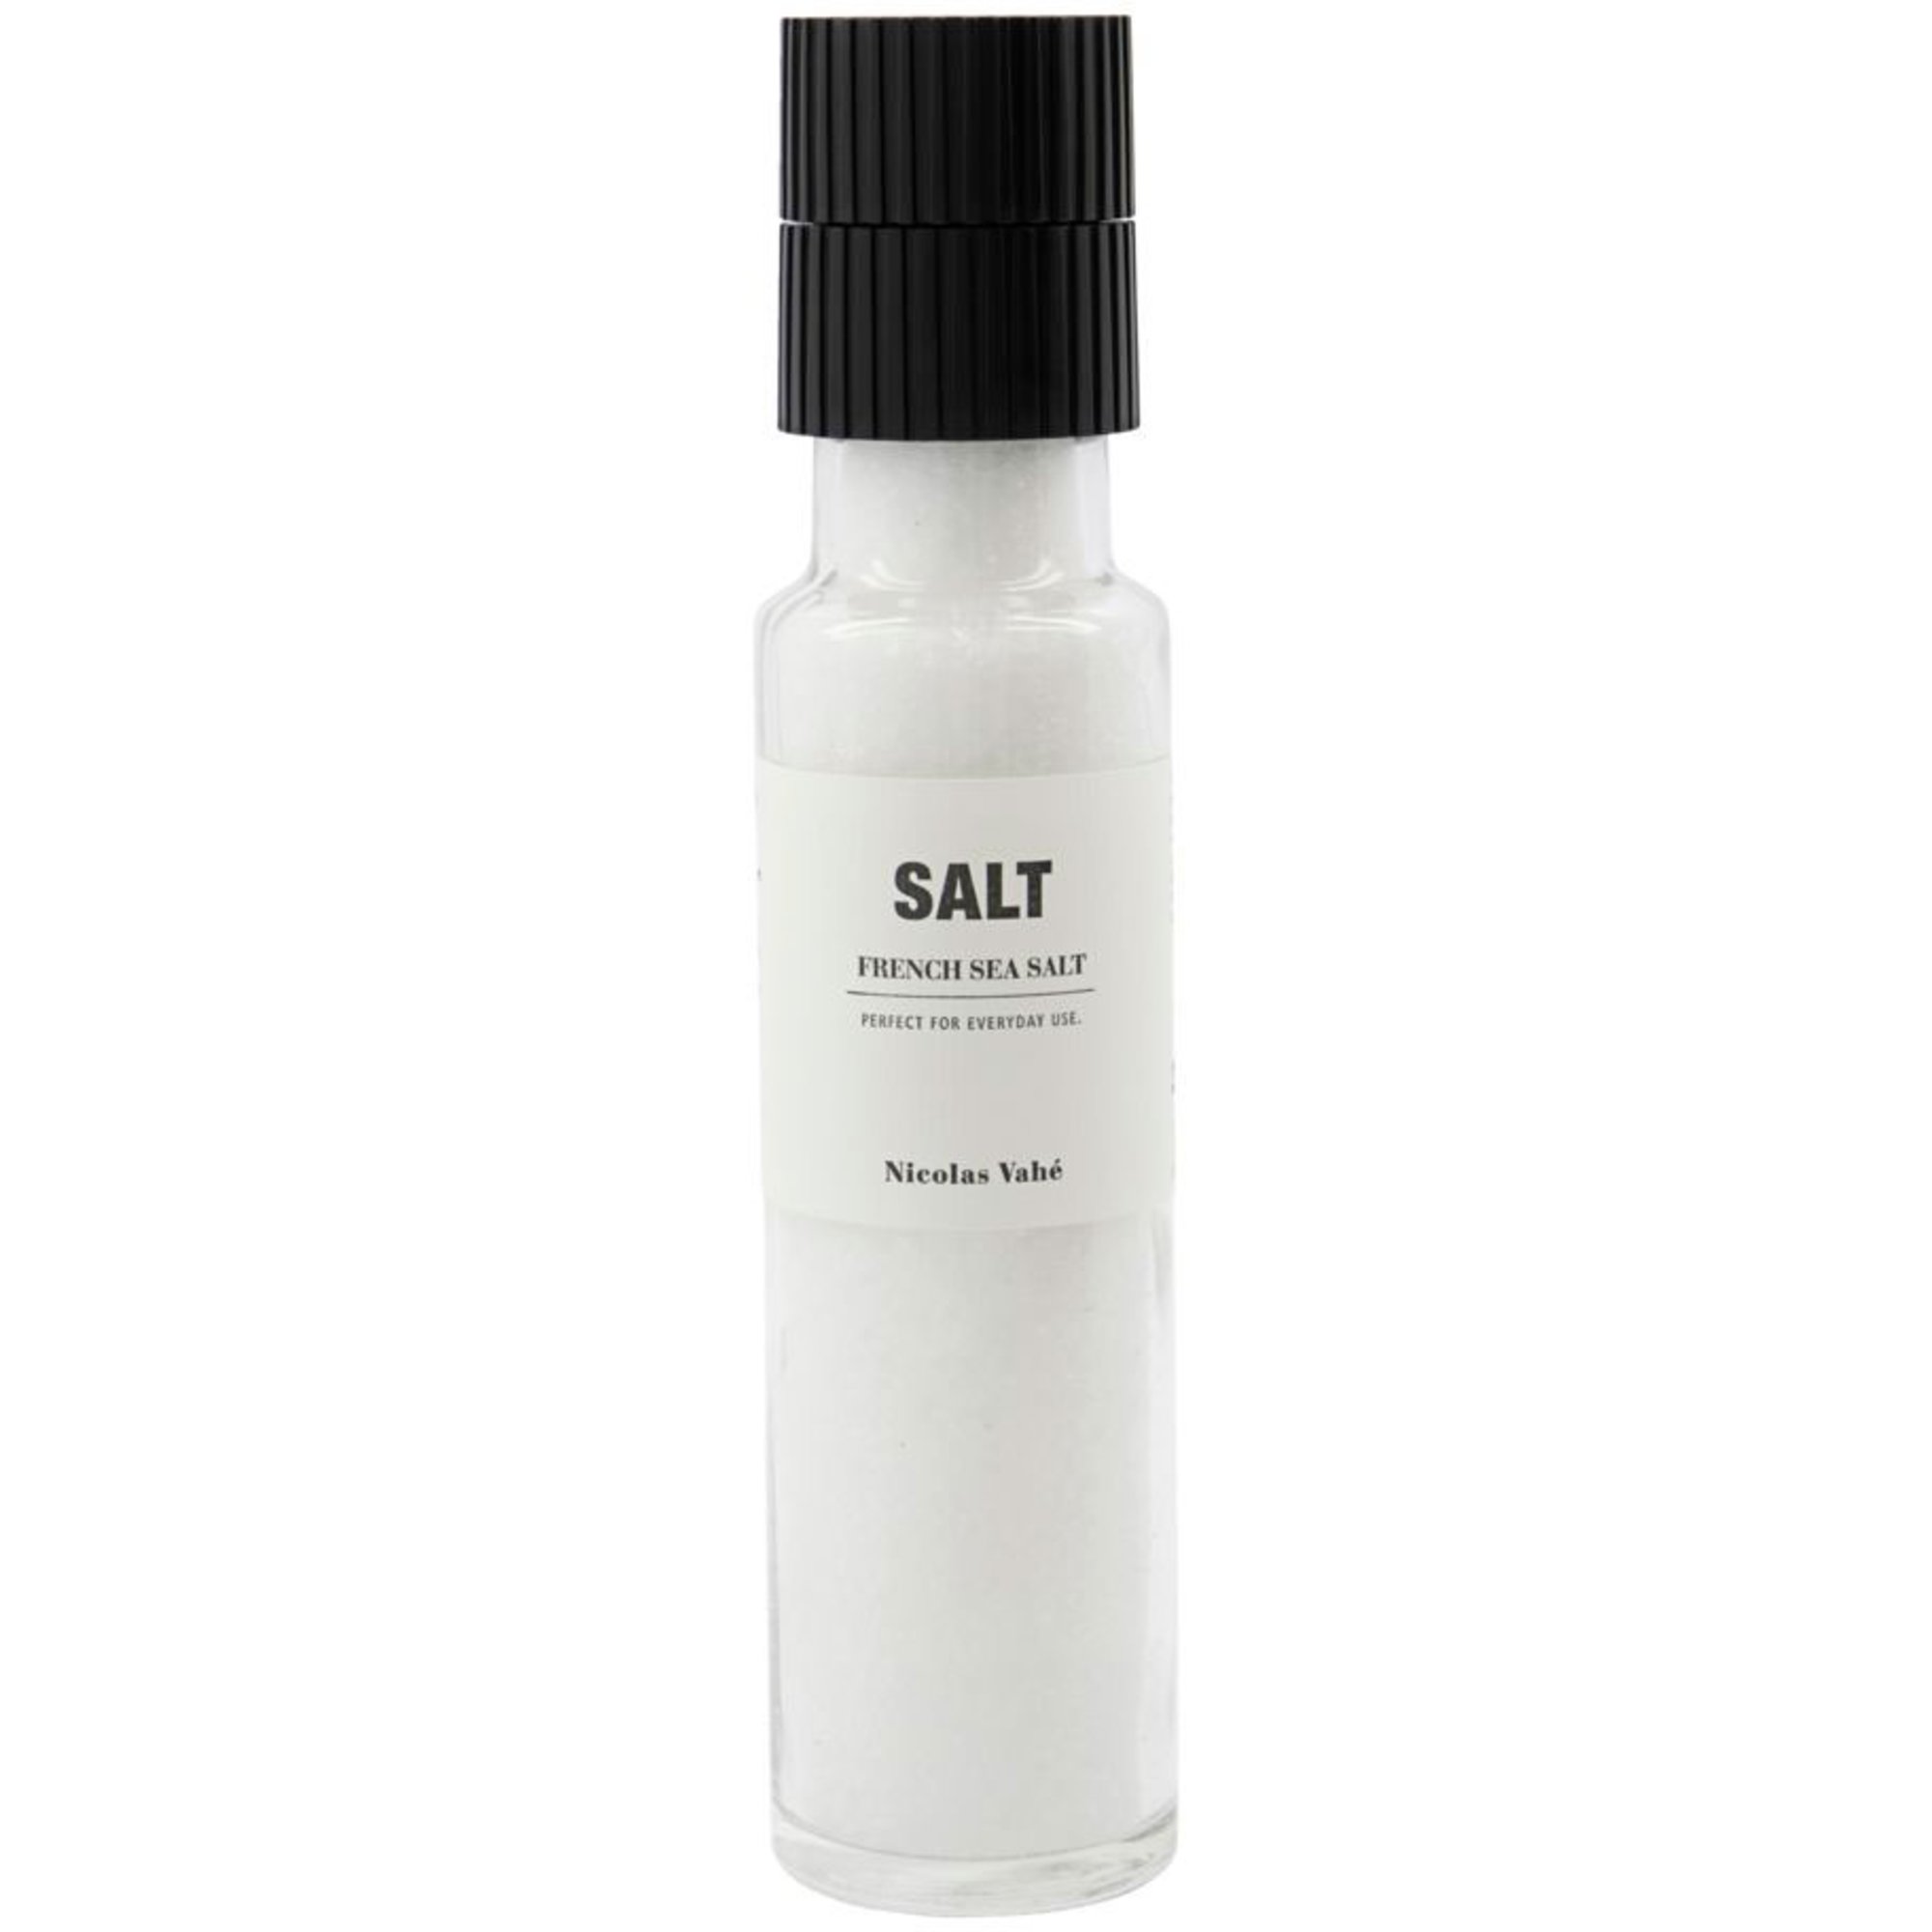 Image of Nicolas Vahé French Sea Salt 335 g